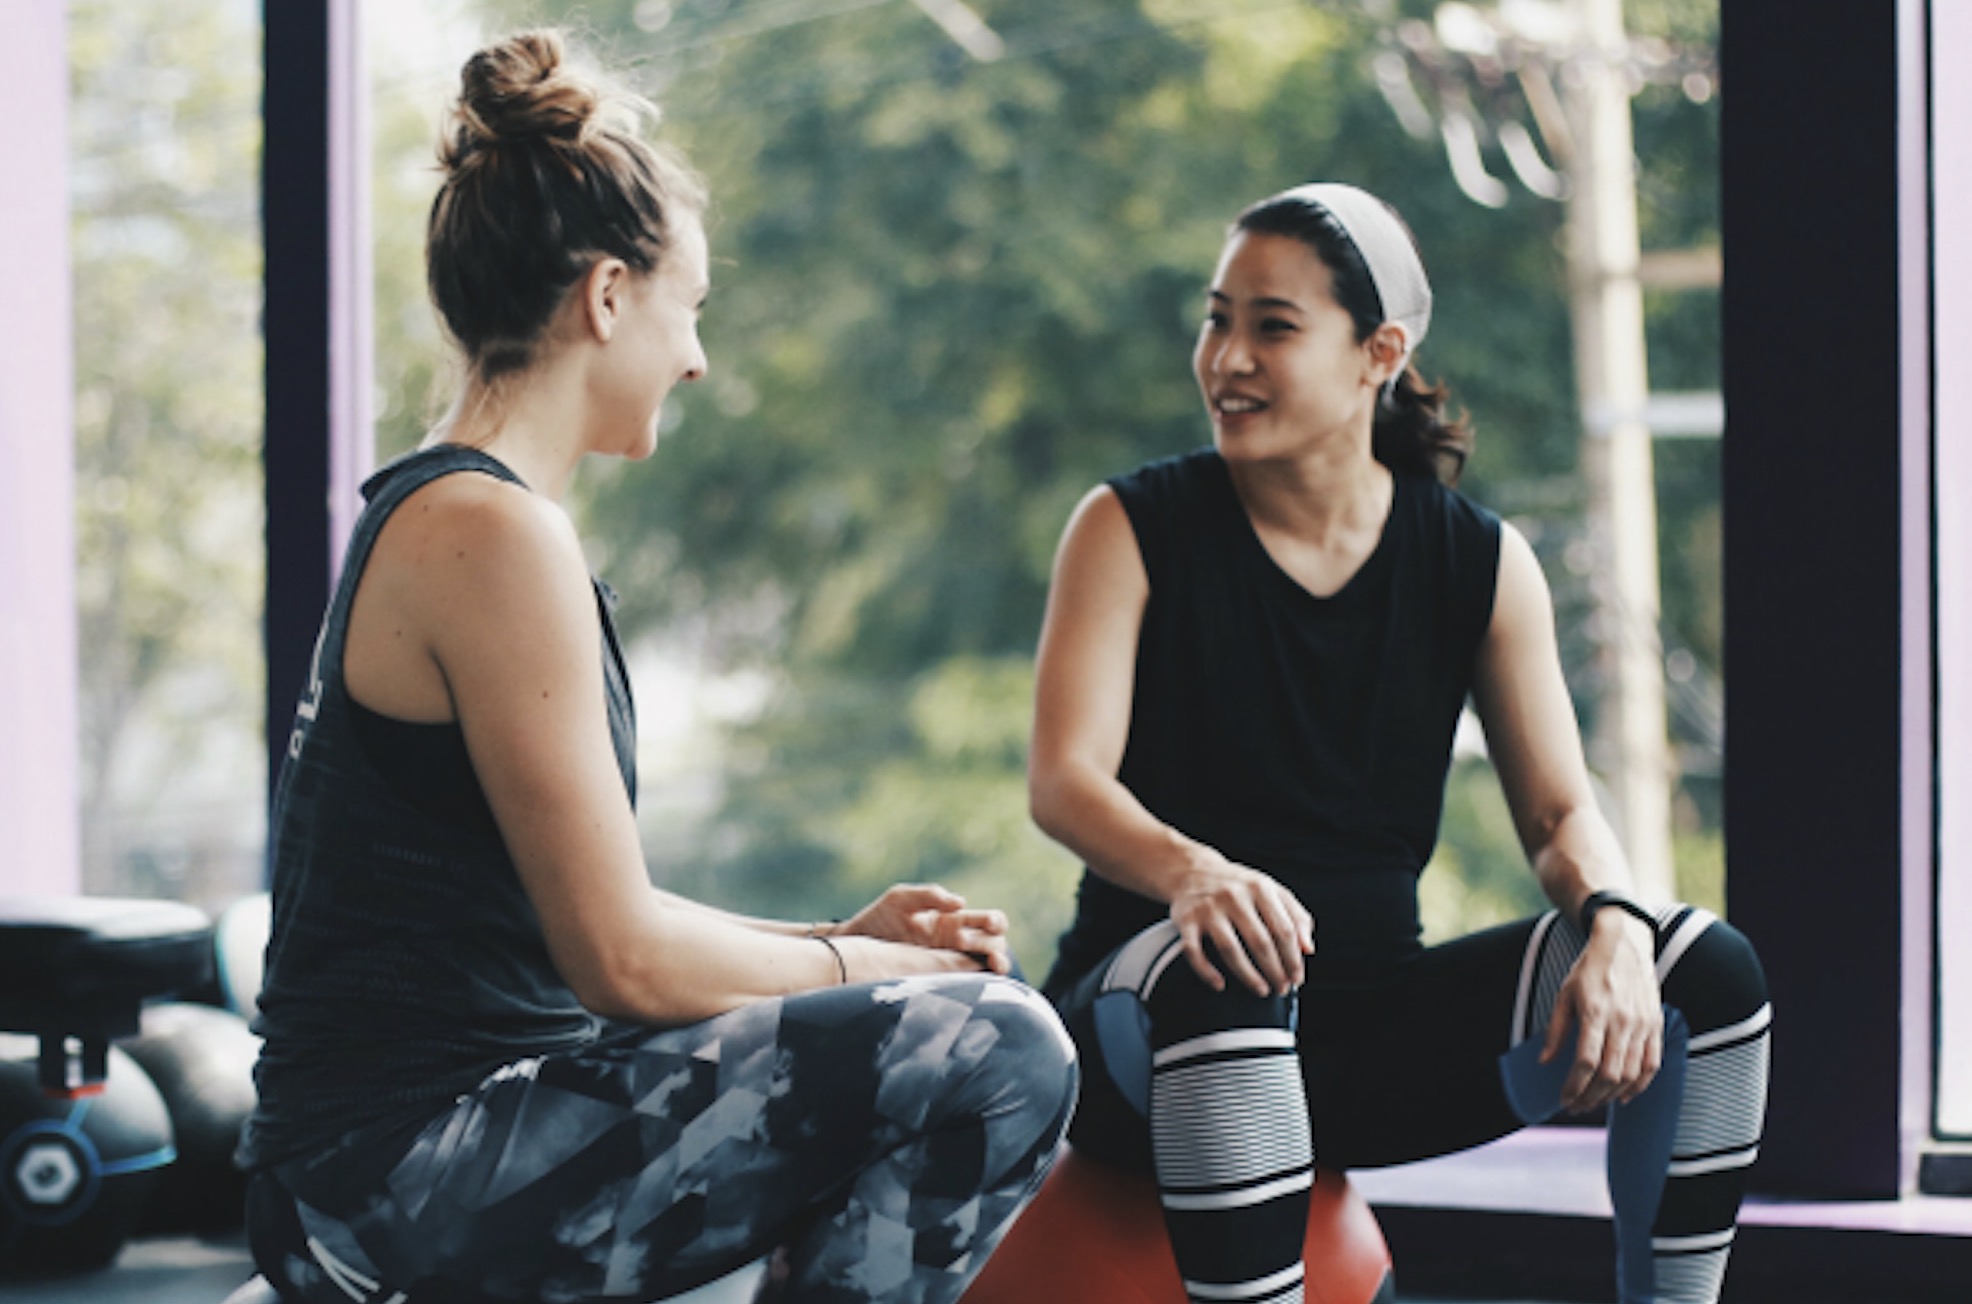 Personal Training At Your Bangkok Condo Or Hotel Gym